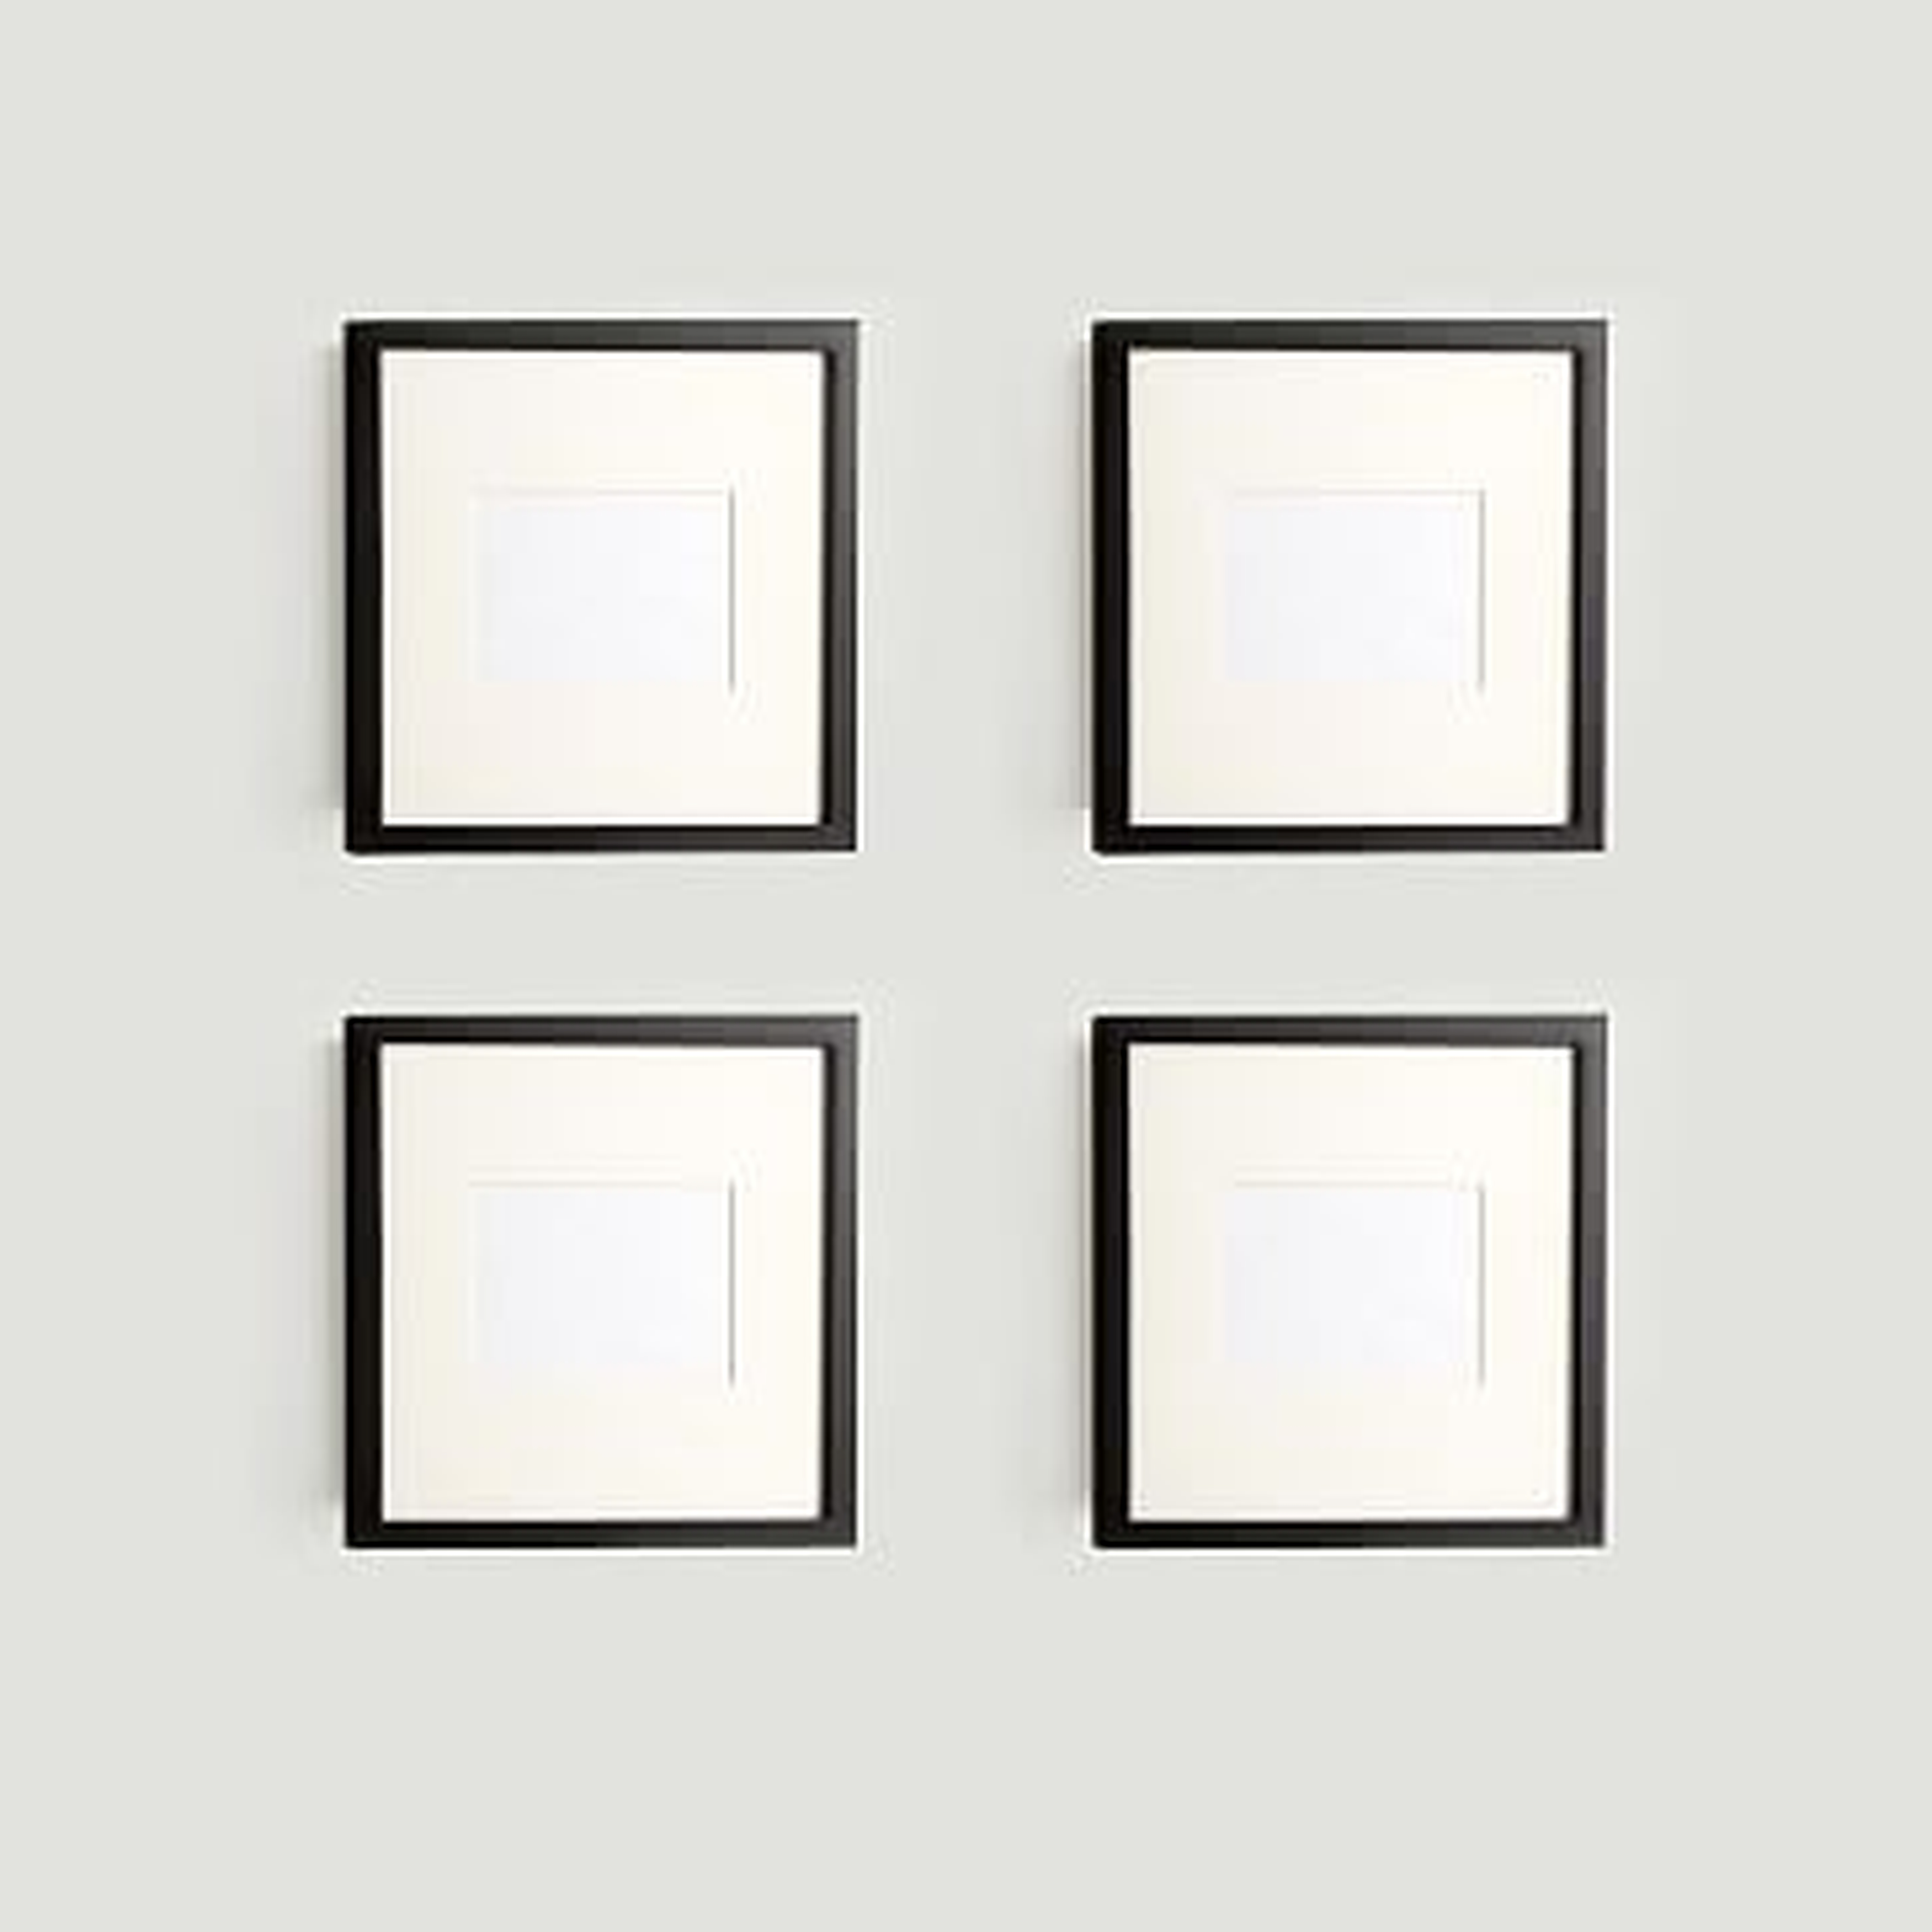 Gallery Frames, Set of 4, 13"x13", Black Lacquer - West Elm